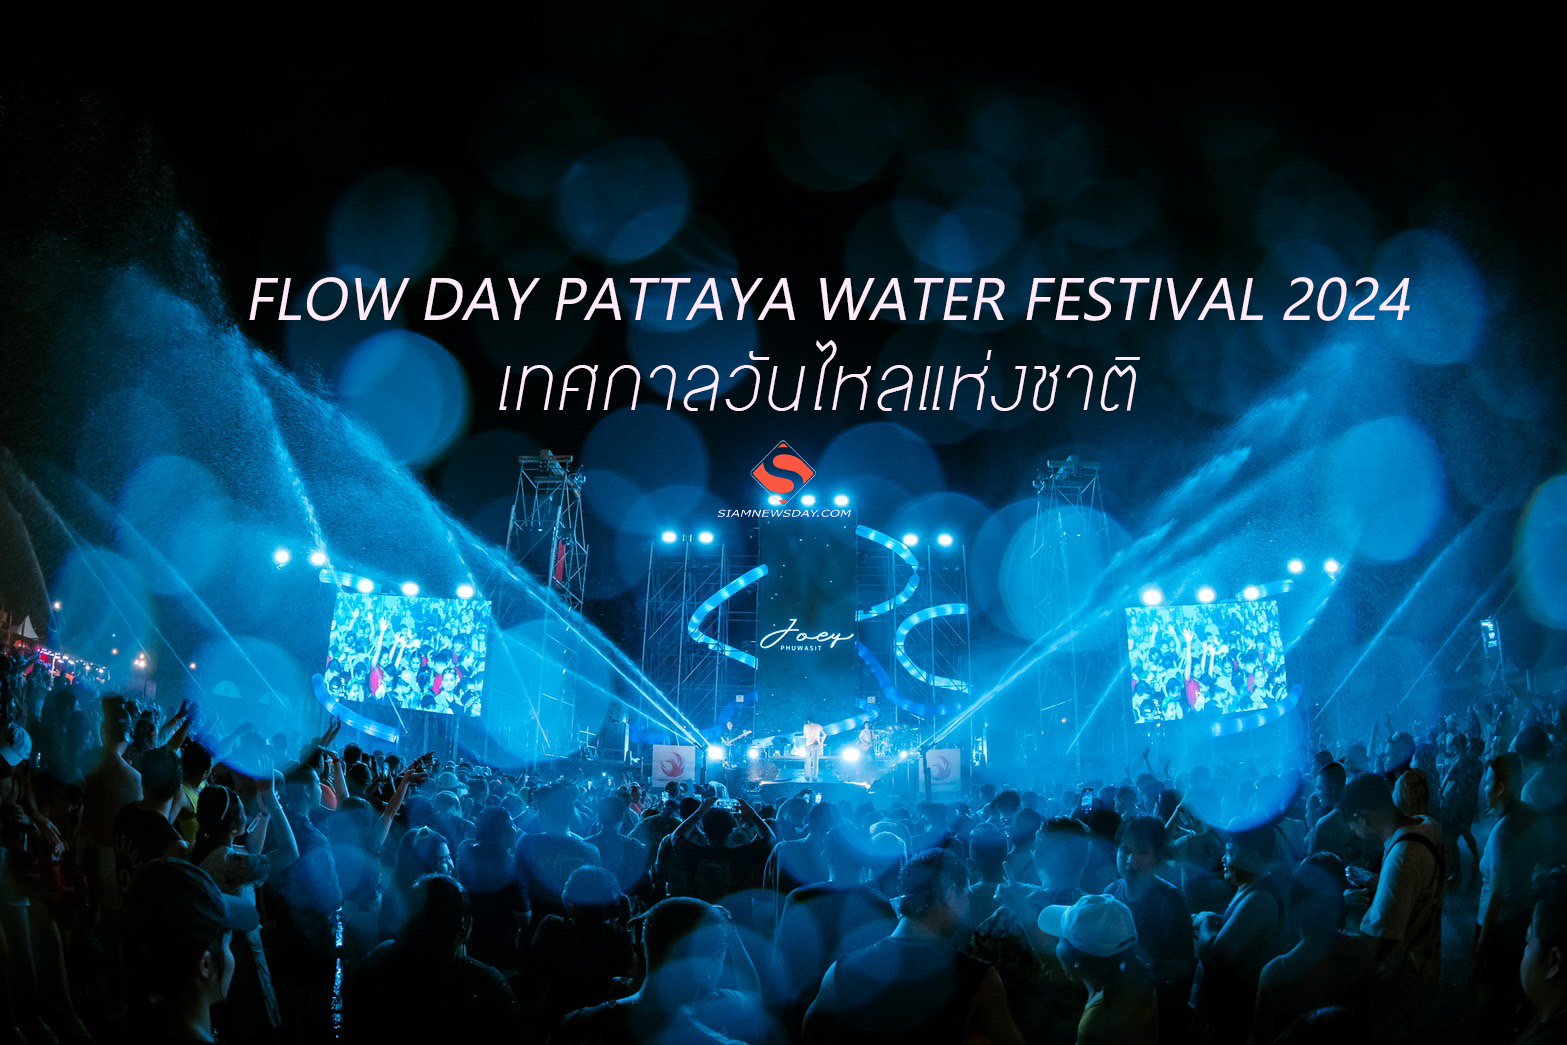 FLOW DAY PATTAYA WATER FESTIVAL 2024 เทศกาลวันไหลแห่งชาติ